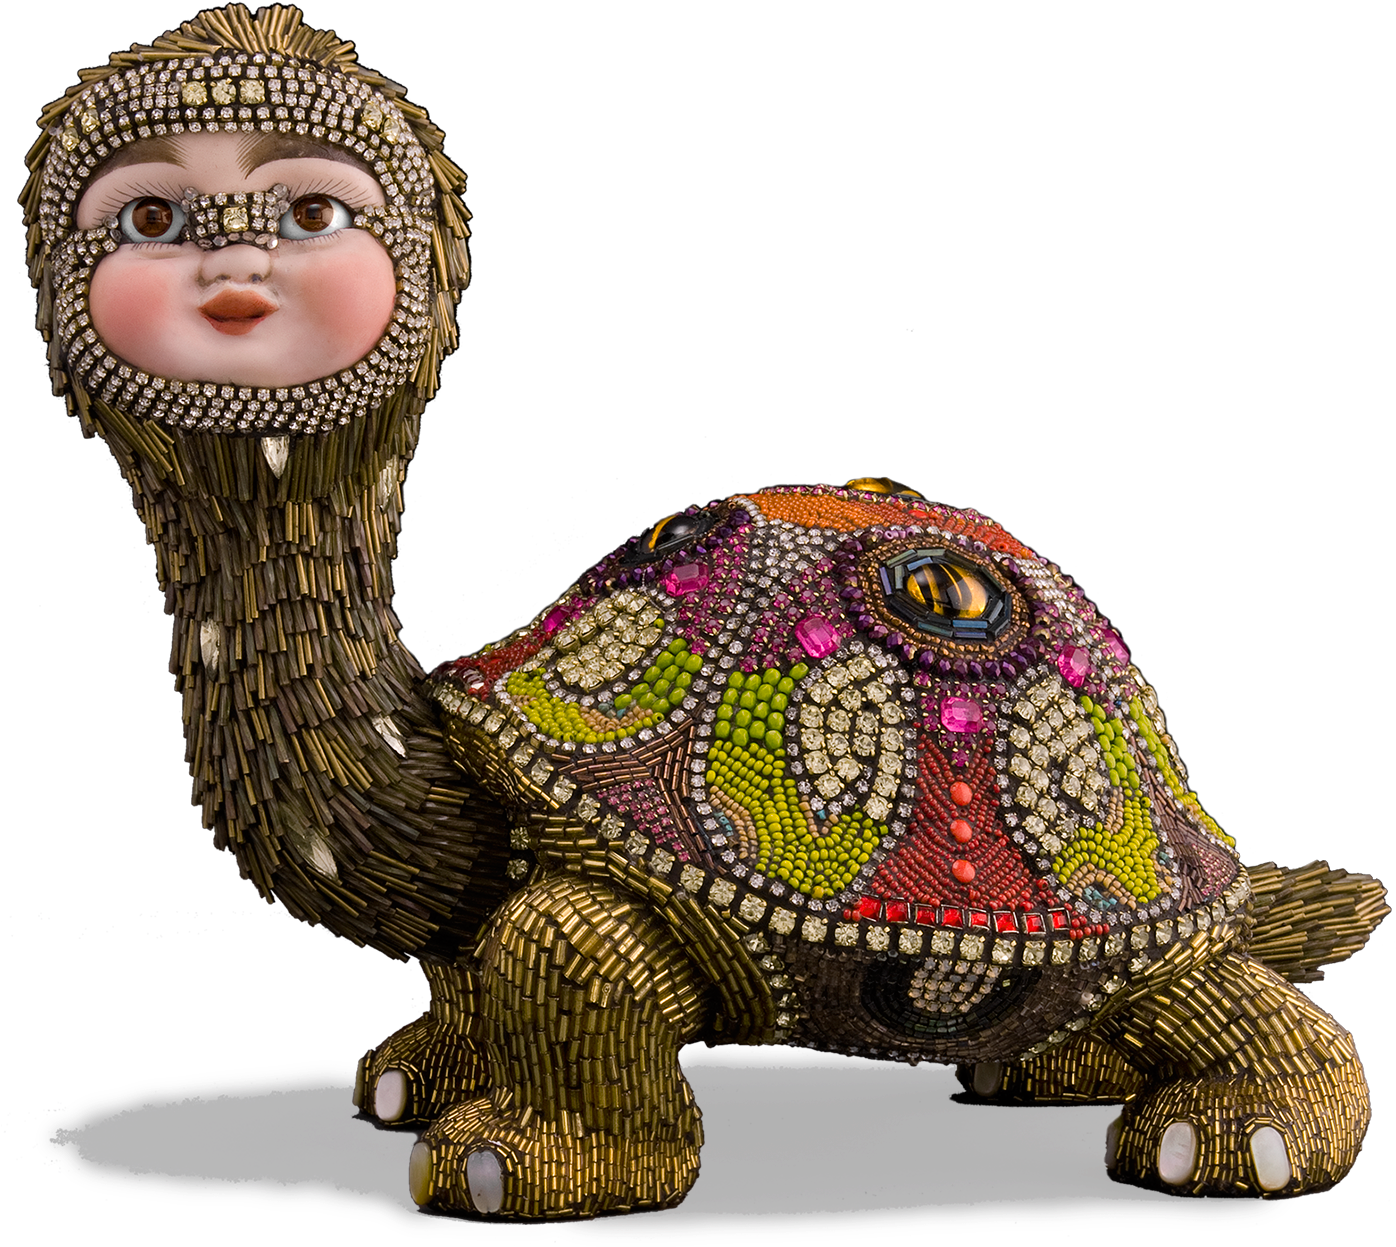 Betsy Creates Unusual Sculptural Mosaics Using Beads - Galápagos Tortoise (1402x1250)